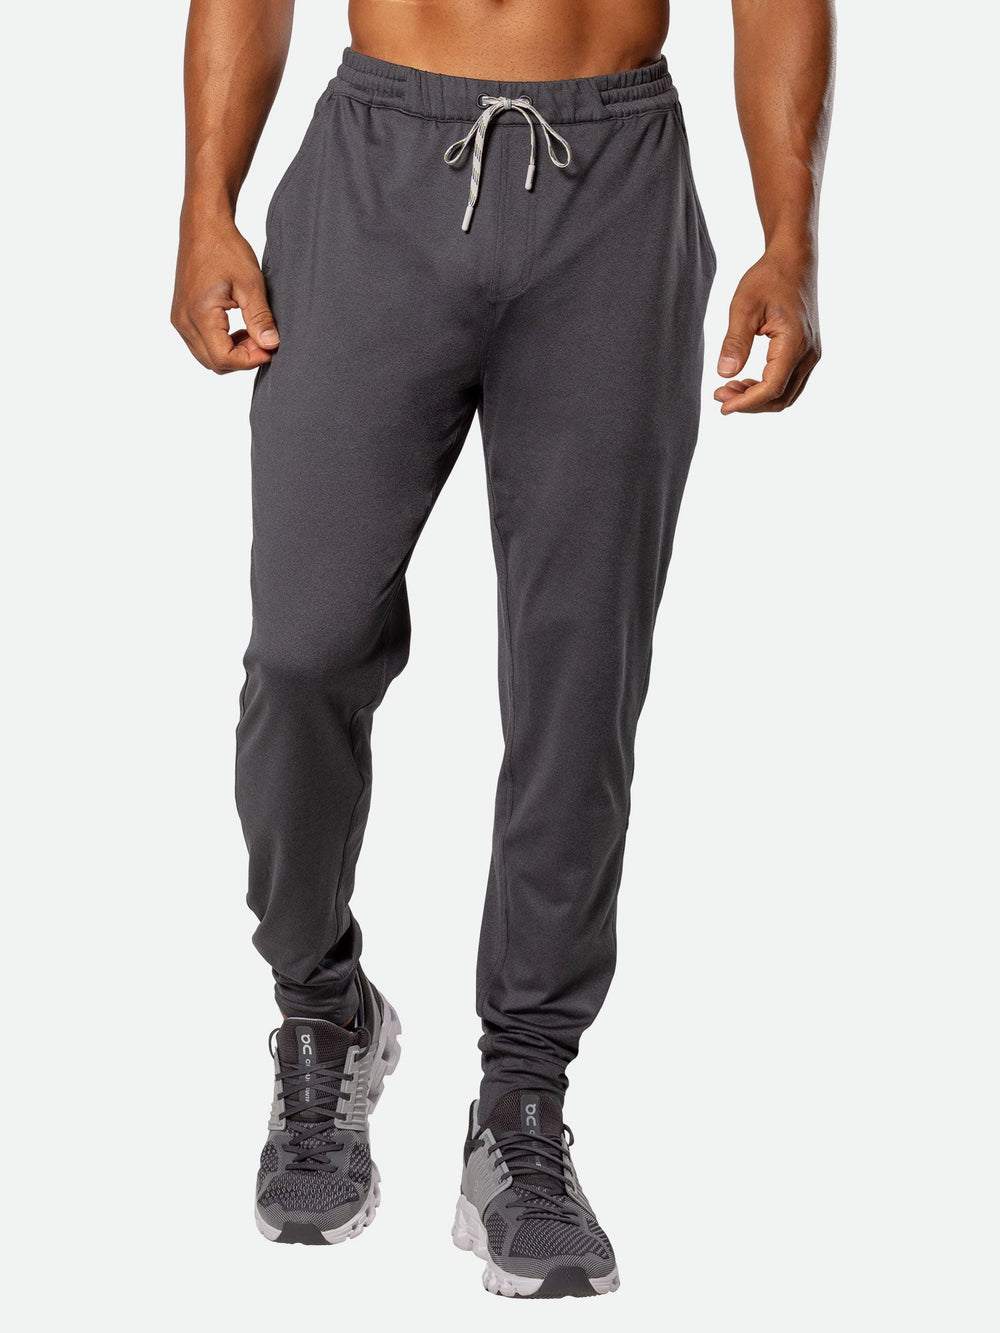 ON SALE!! Men Casual Jogger Pants Sweatpants Cargo Combat Loose Urban  Trousers | eBay